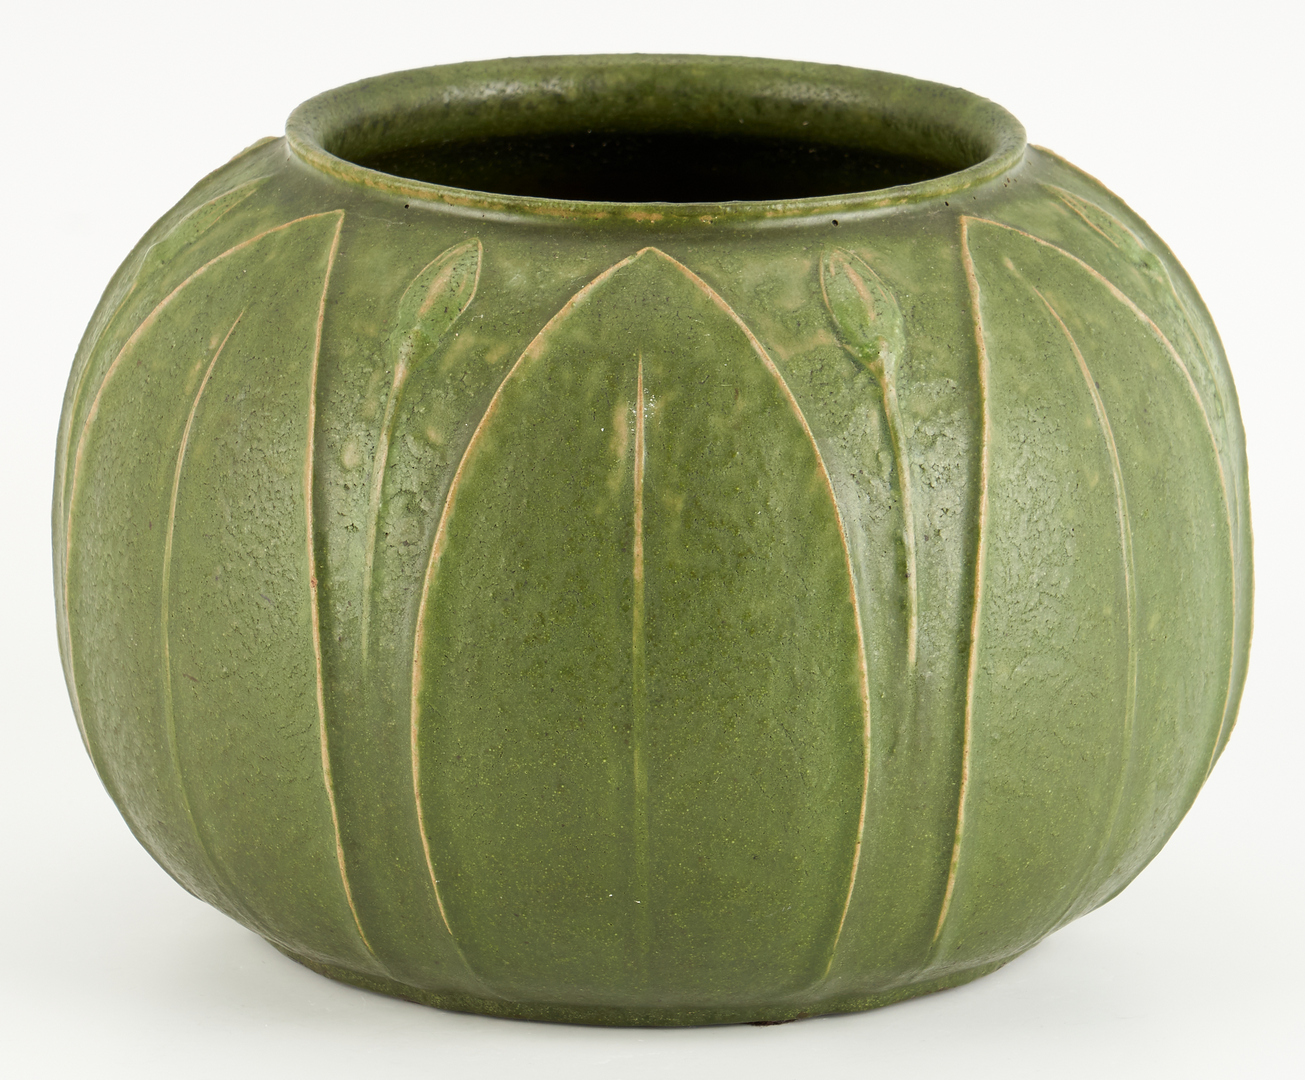 Lot 526: Grueby Art Pottery Low Vase, Green Matte Glaze